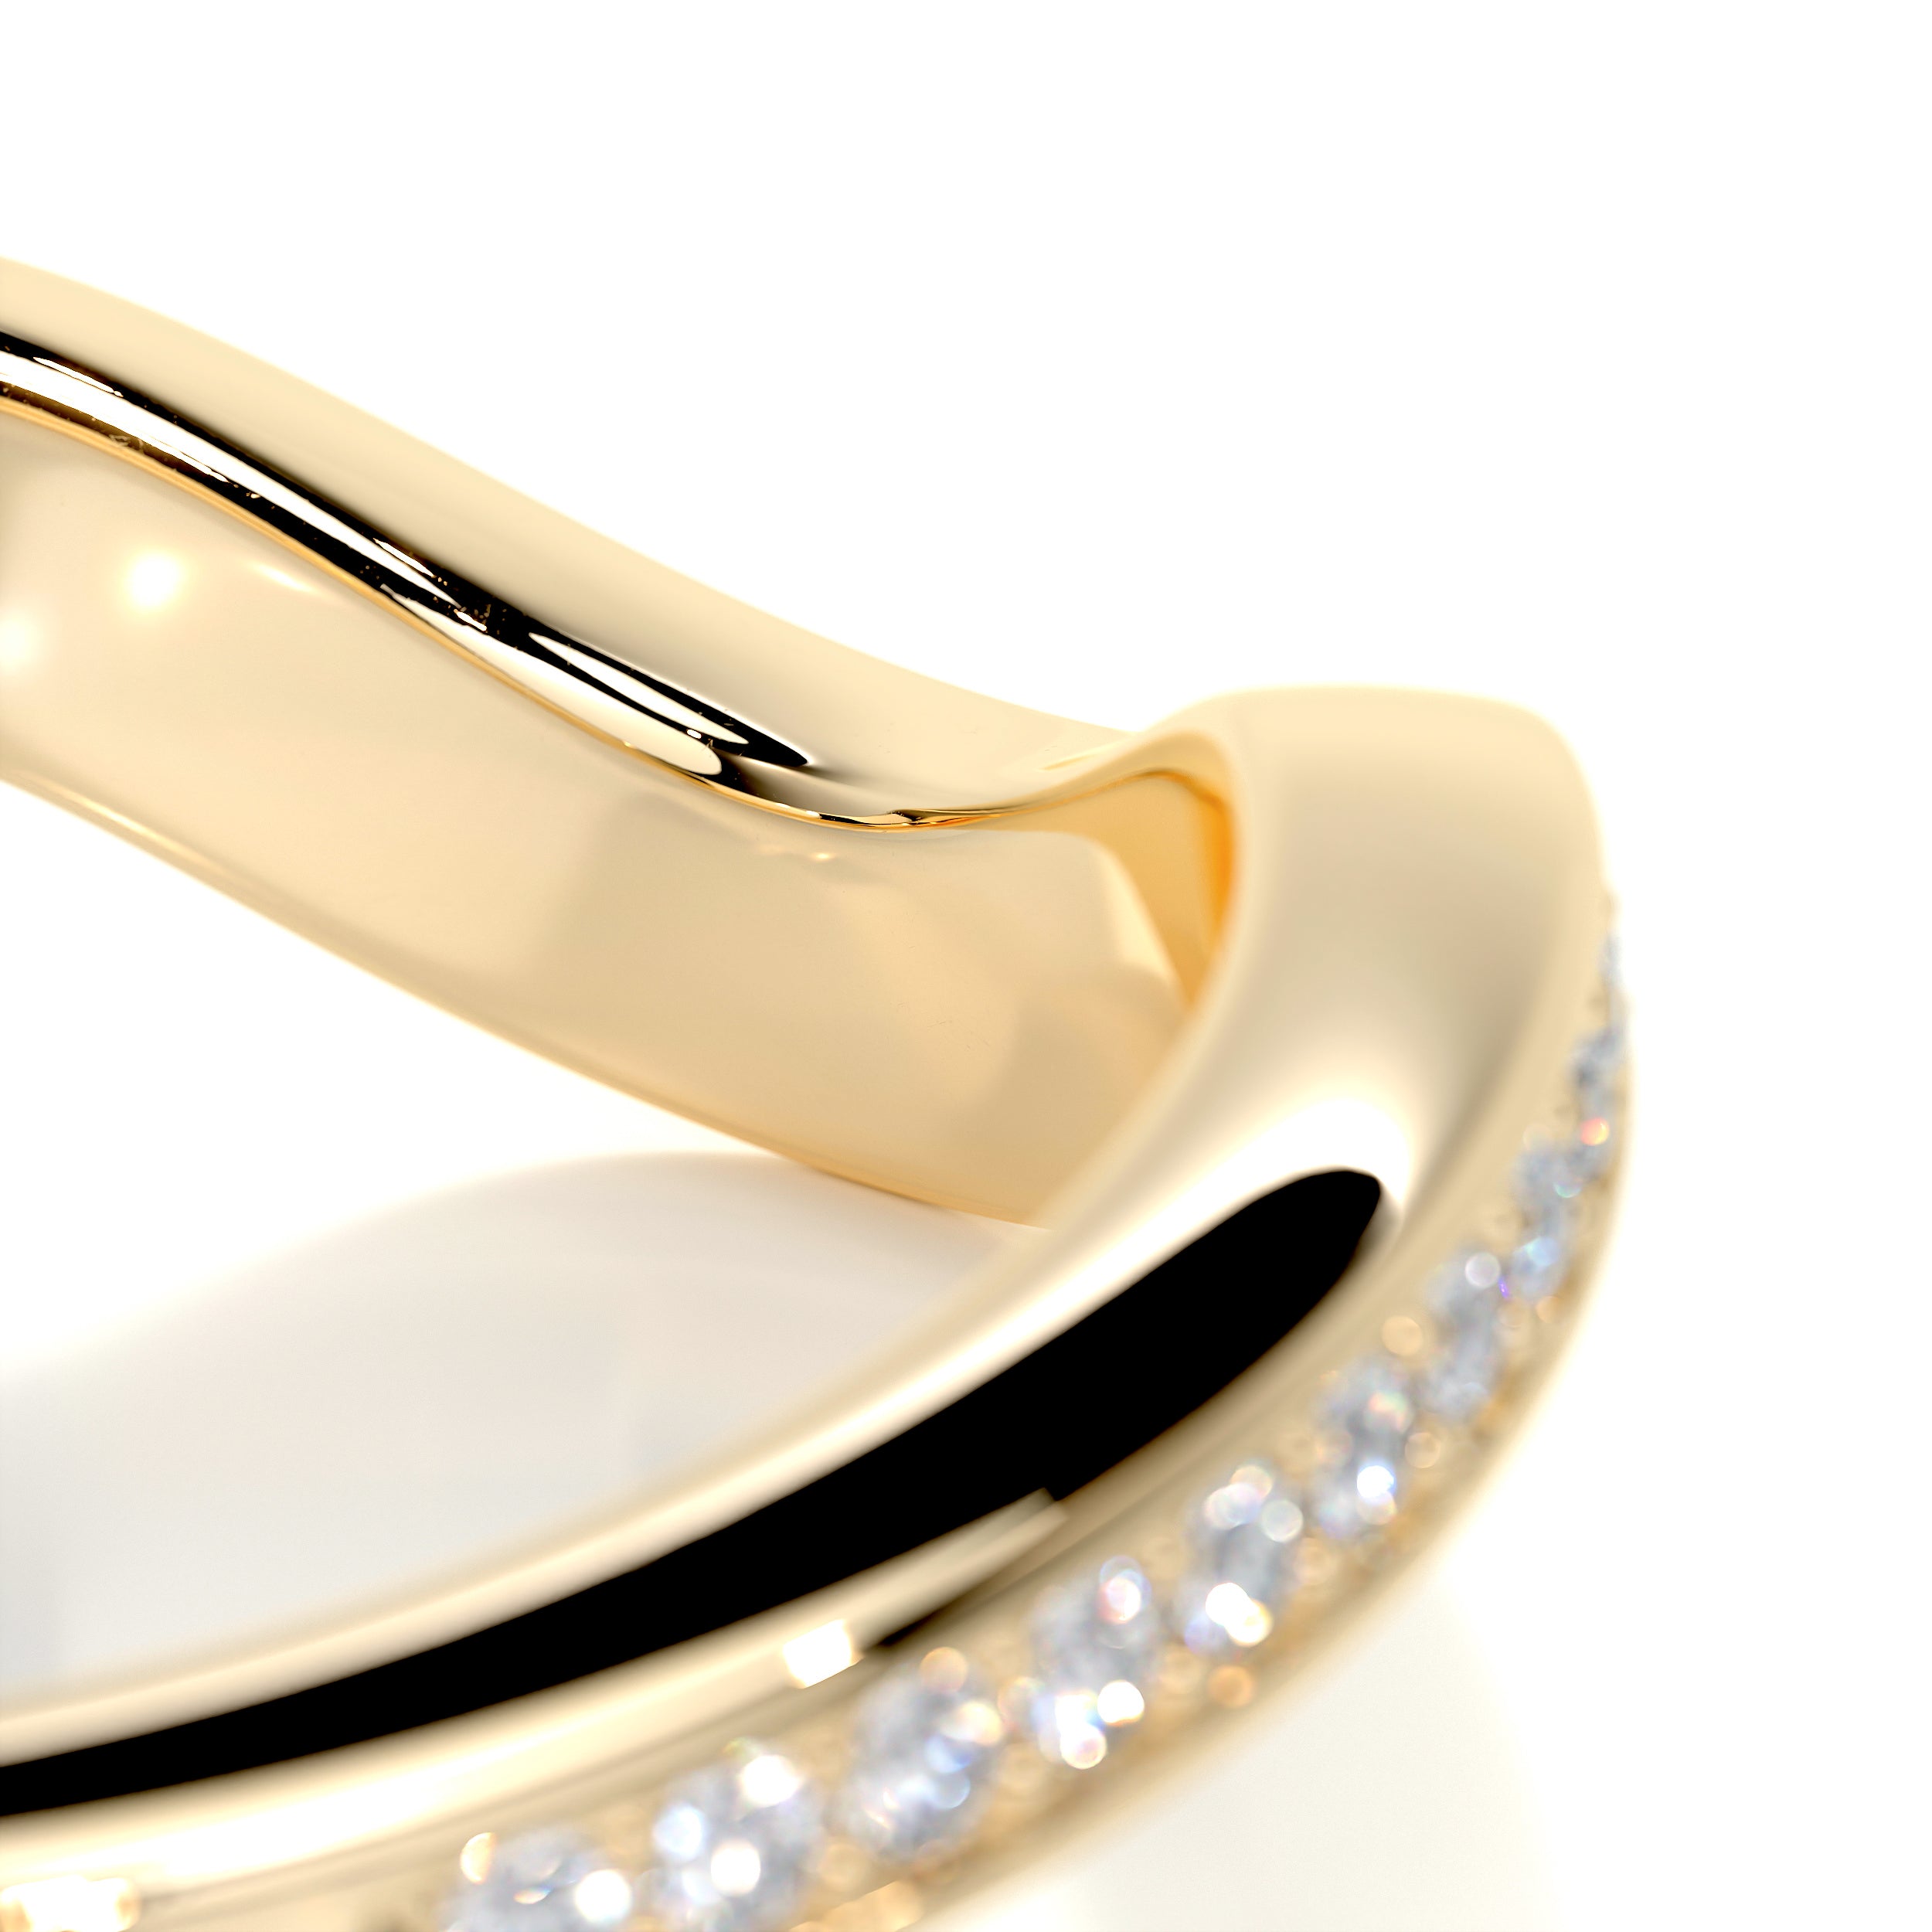 Lucy Diamond Wedding Ring   (0.30 Carat) -18K Yellow Gold